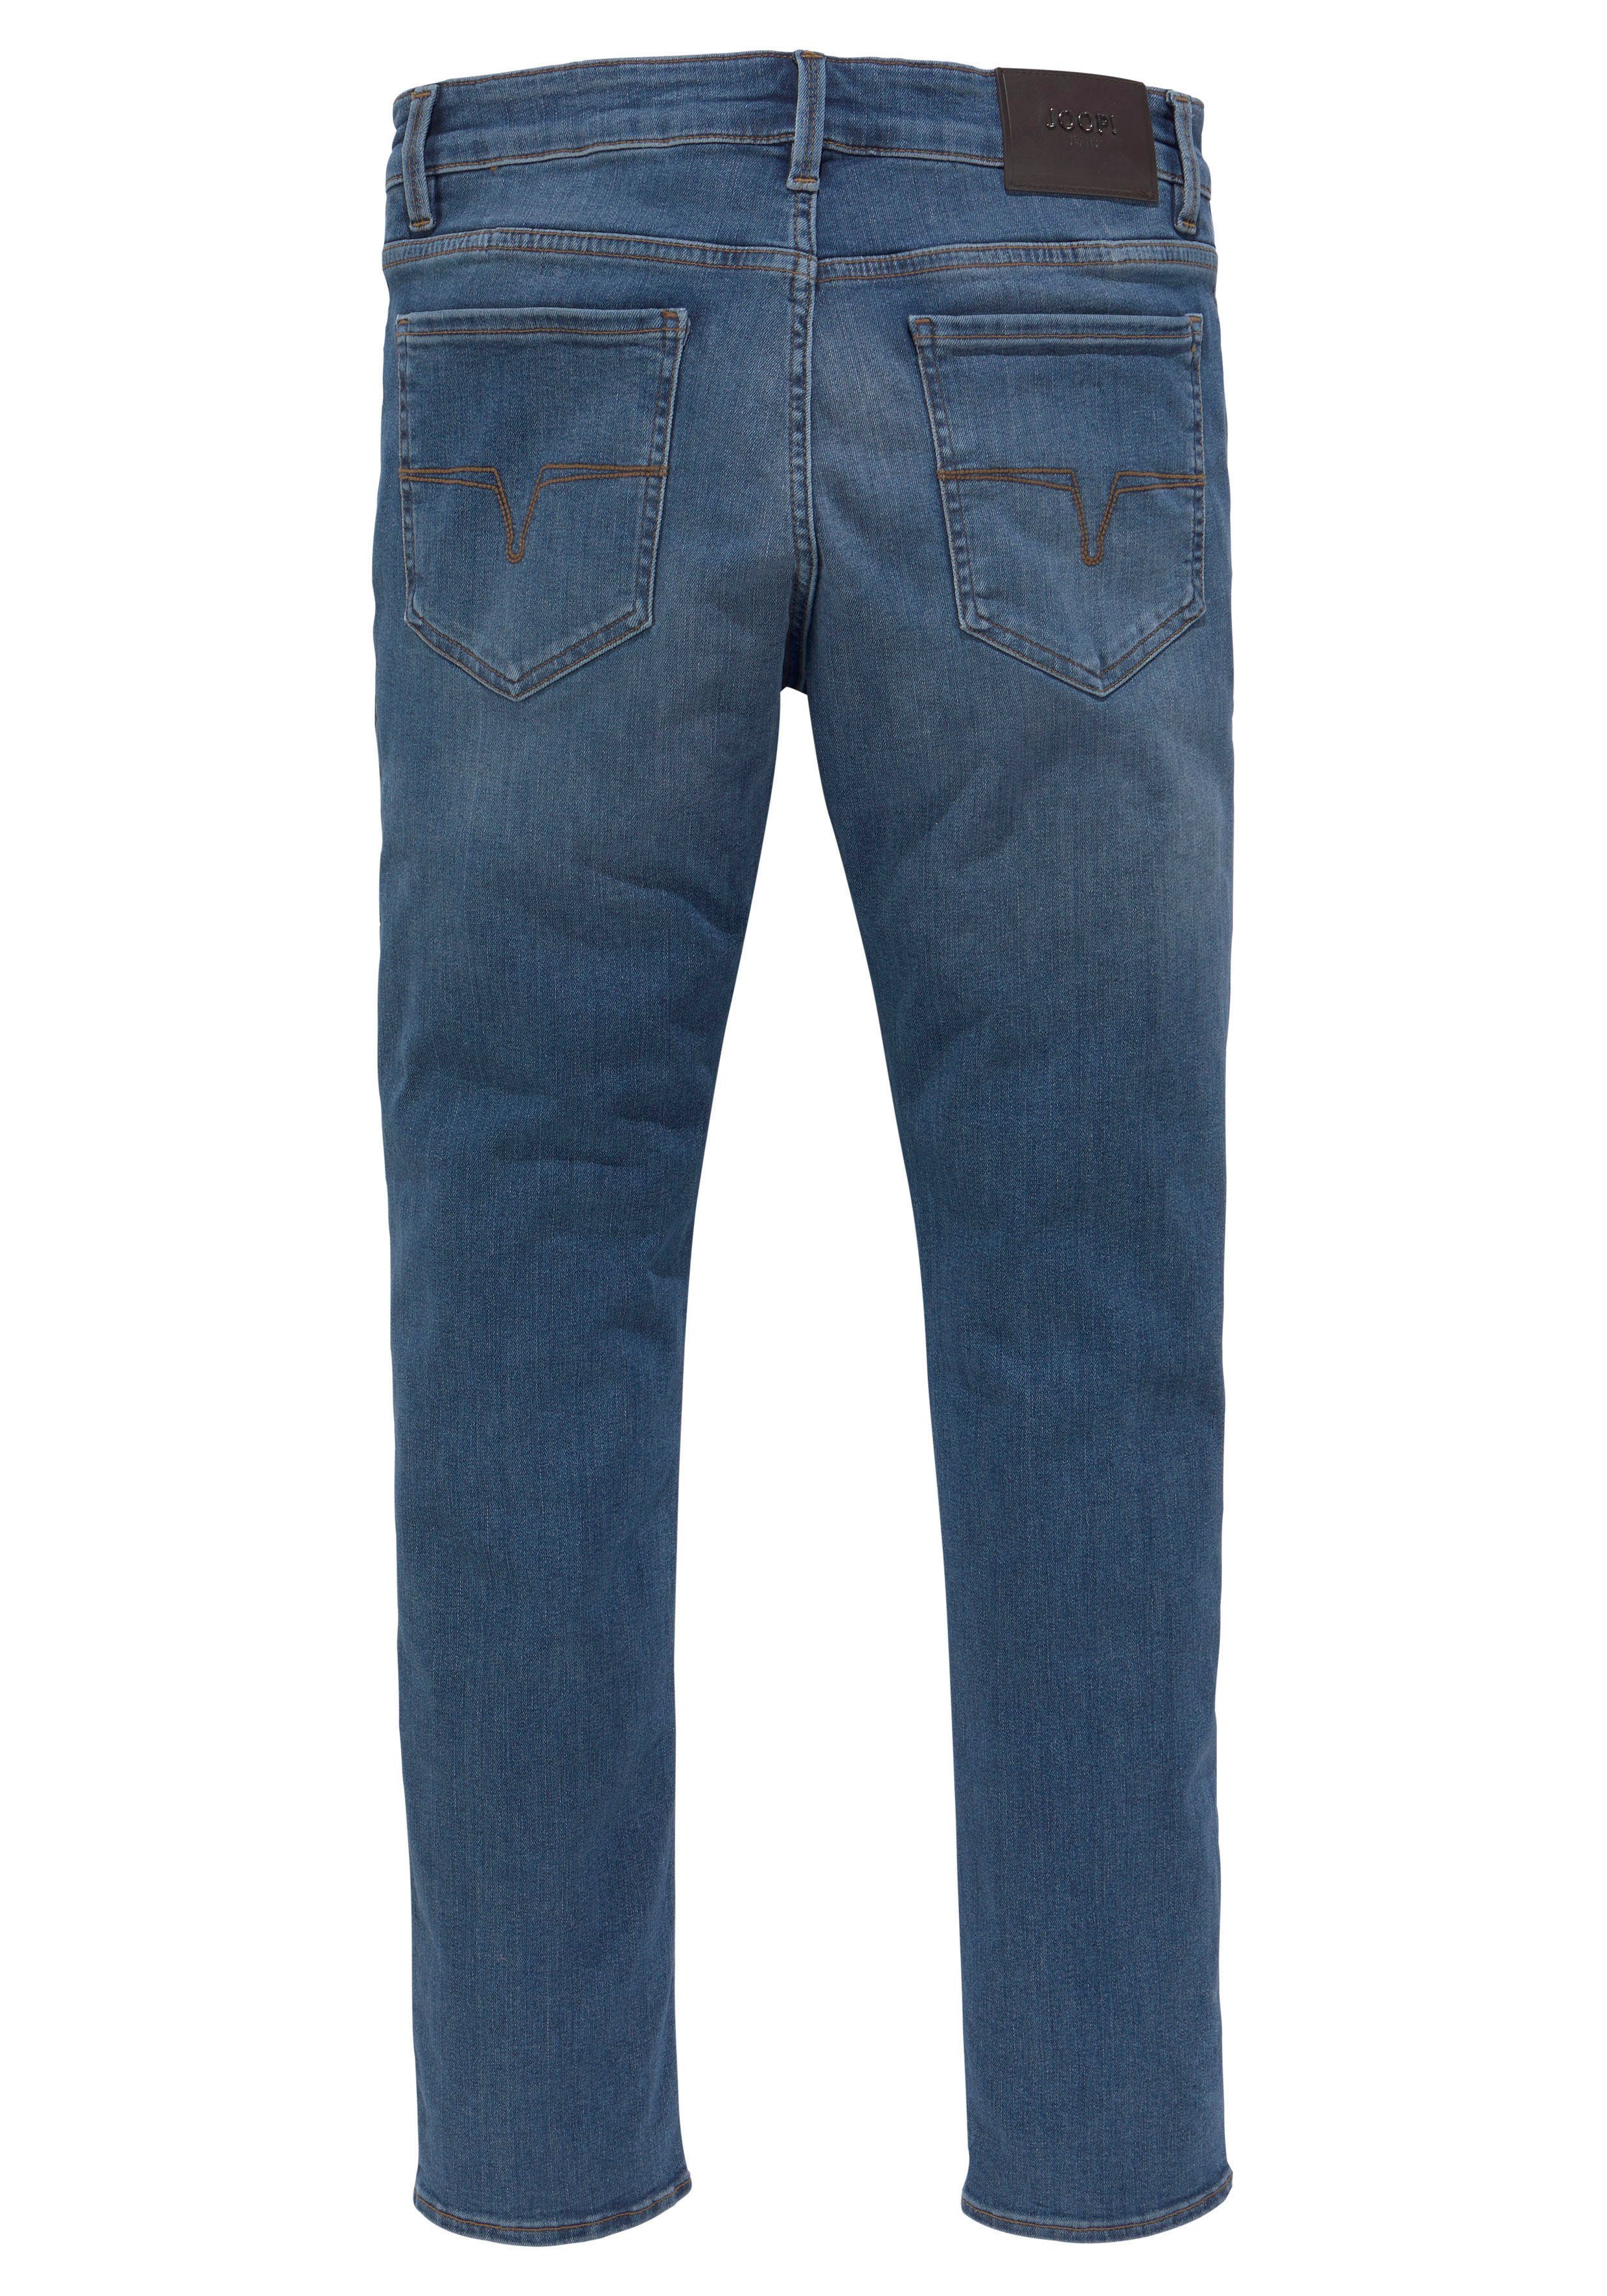 Turquoise Stephen Aqua Jeans Joop 5-Pocket-Jeans